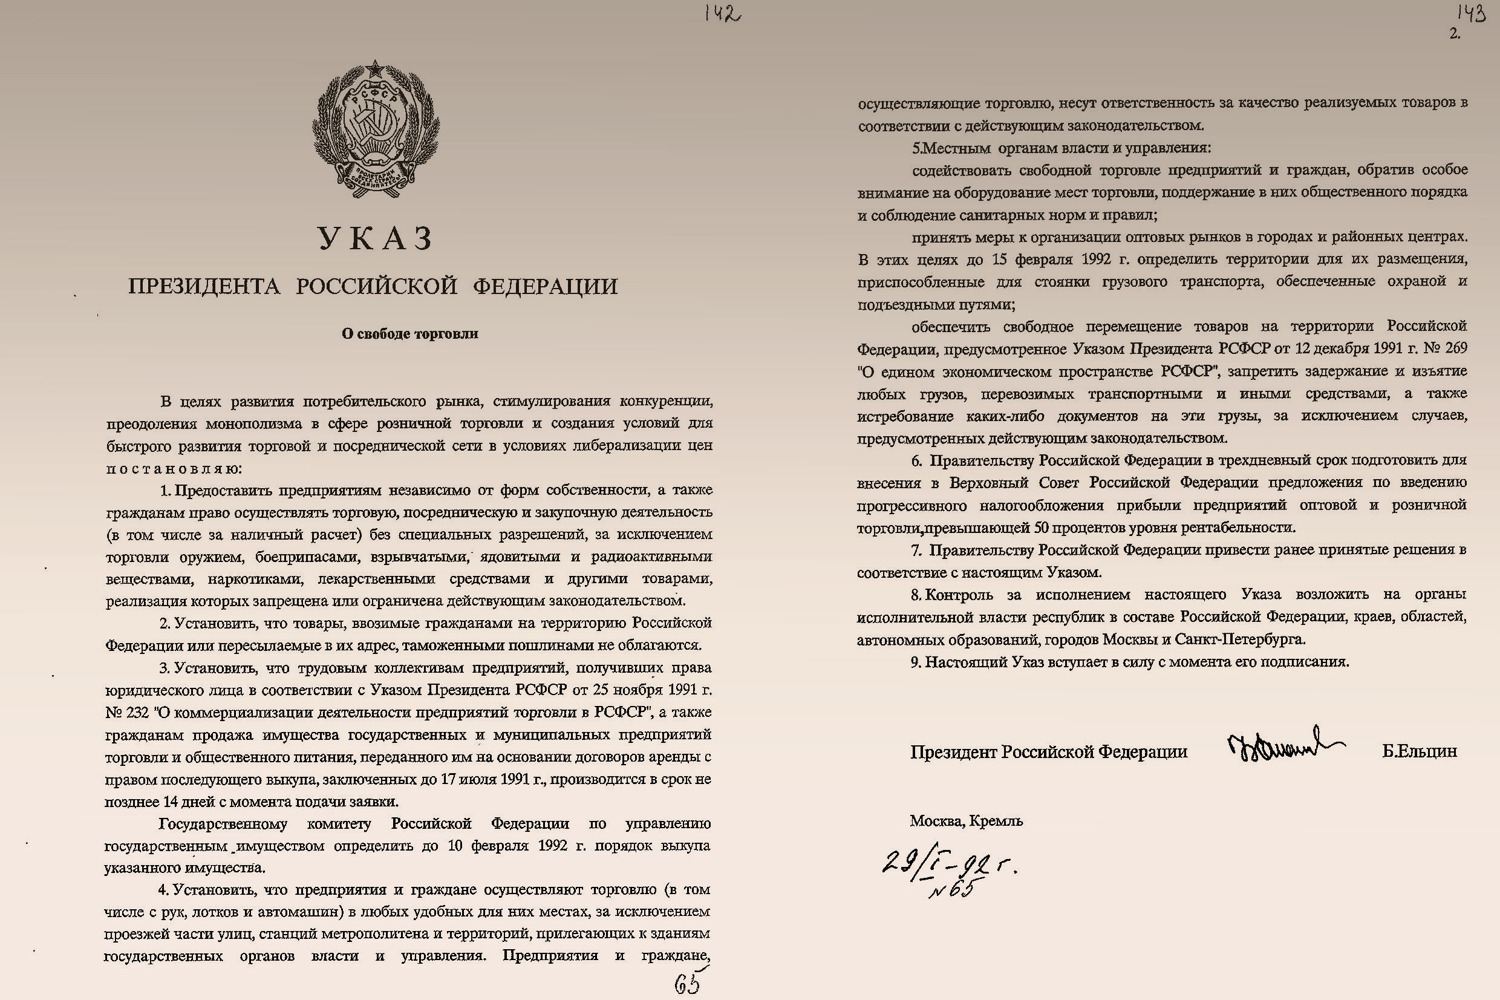 Указ 975 от 21 декабря 2023 года. Указ о свободе торговли 1992. Указ Ельцина о свободе торговли. Указ о свободной торговле 1992. Указ президента от 29 января 1992 о свободе торговли.